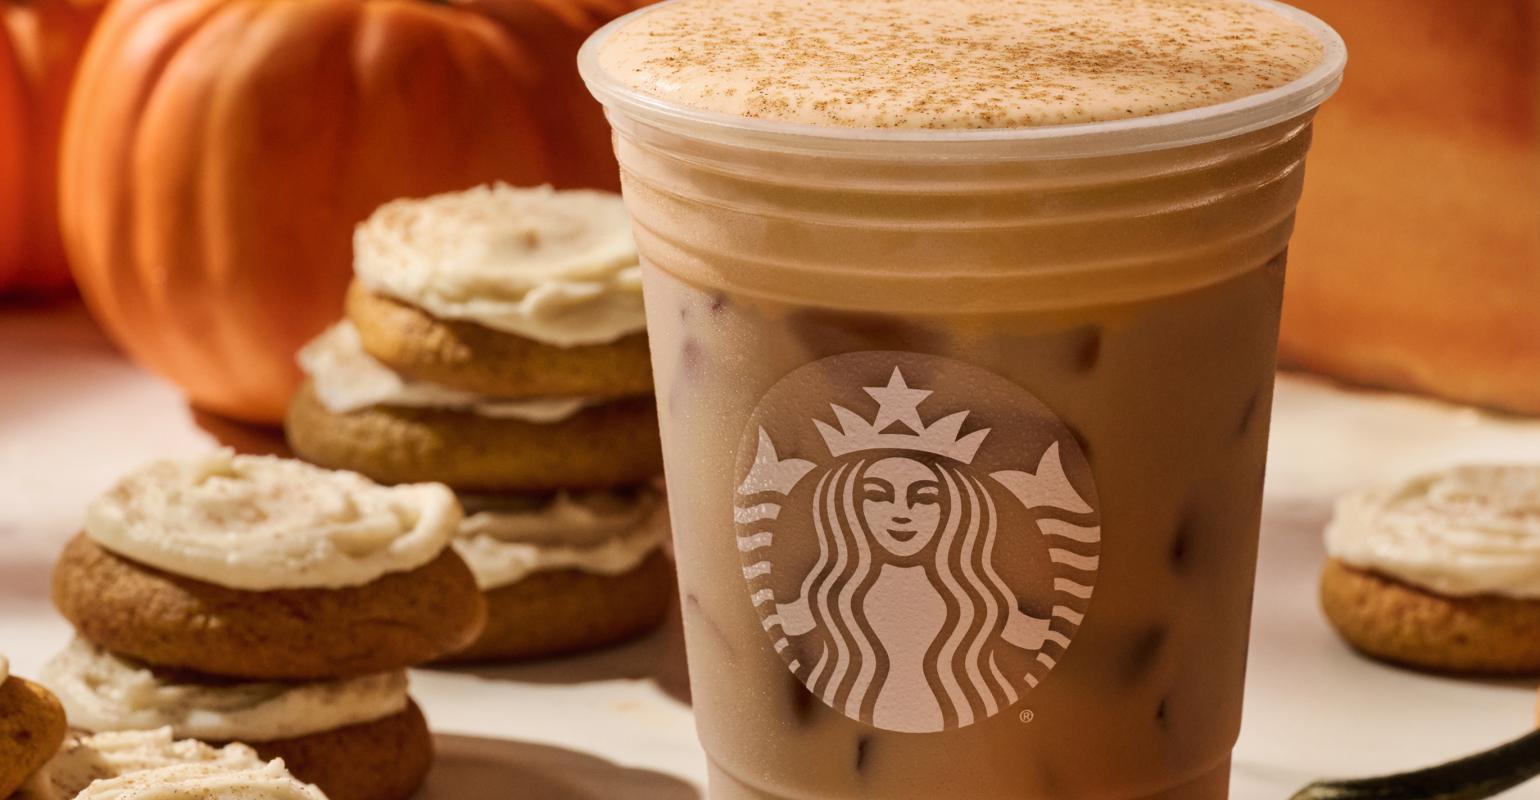 https://www.nrn.com/sites/nrn.com/files/styles/article_featured_retina/public/Starbucks-Iced-Pumpkin-Cream-Chai-Tea-Latte.jpg?itok=xC7_m393